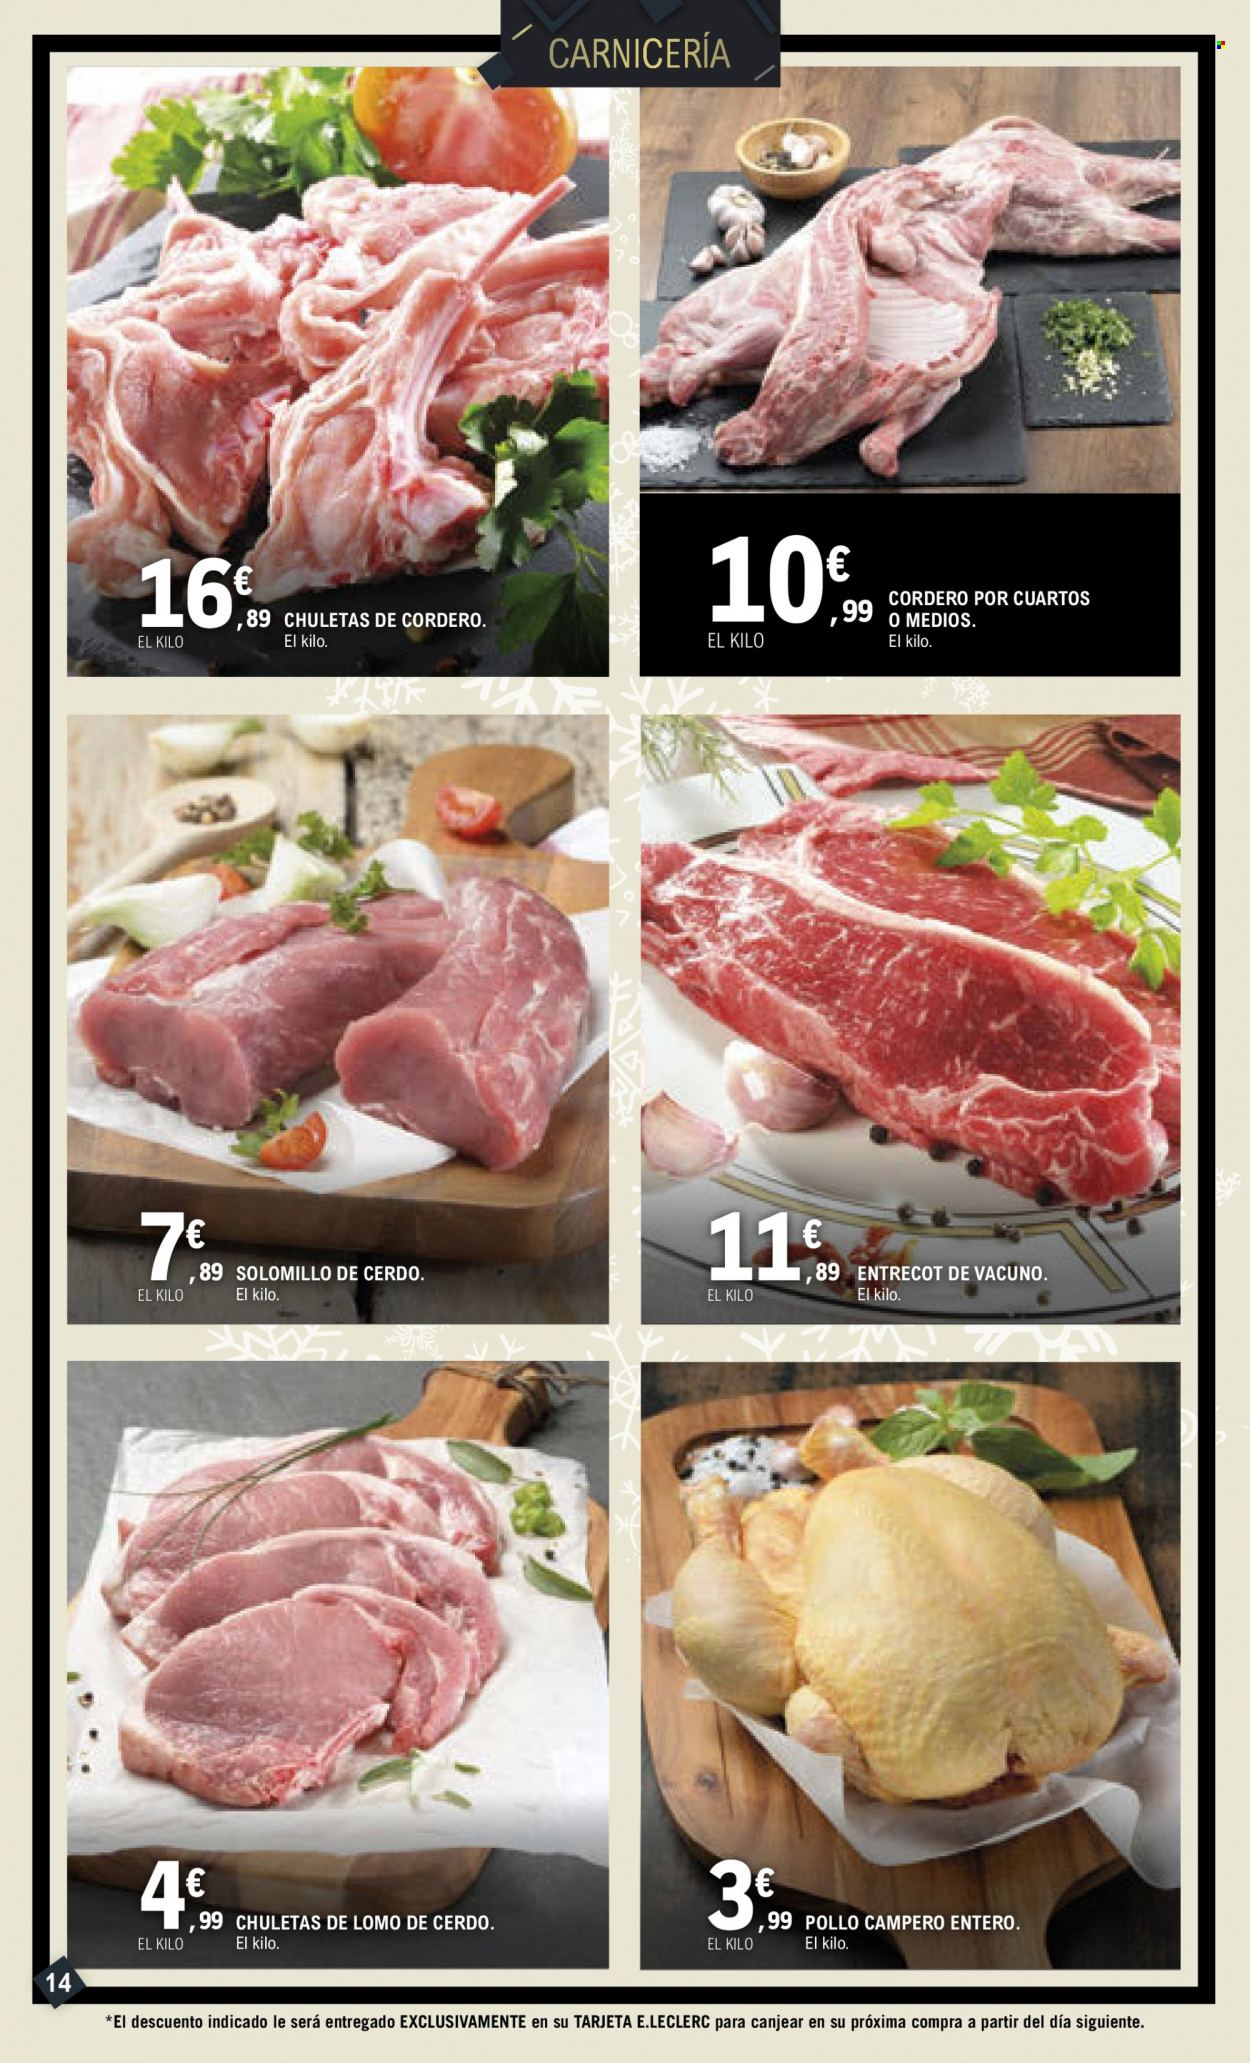 thumbnail - Folleto actual E.Leclerc - 21/11/22 - 04/12/22 - Ventas - cordero, chuleta, solomillo, solomillo de cerdo, carne bovina, entrecot, pollo, lomo de cerdo. Página 14.